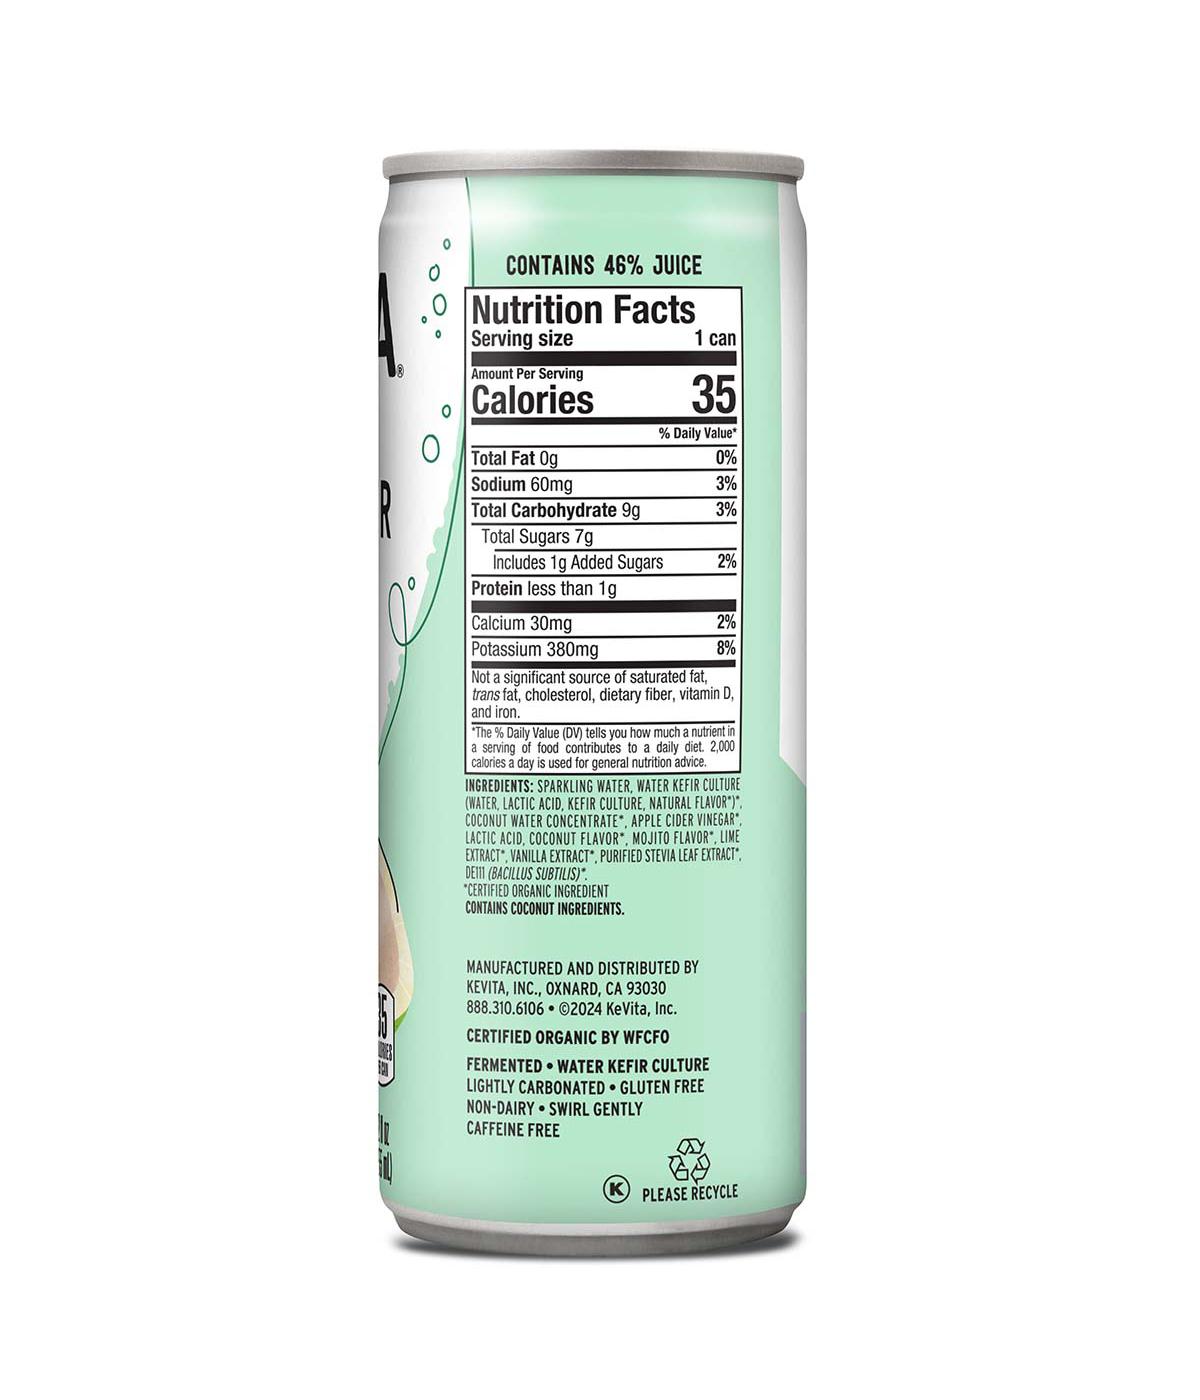 KeVita Probiotic Refresher Sparkling Mojita Lime Mint Drink; image 2 of 4